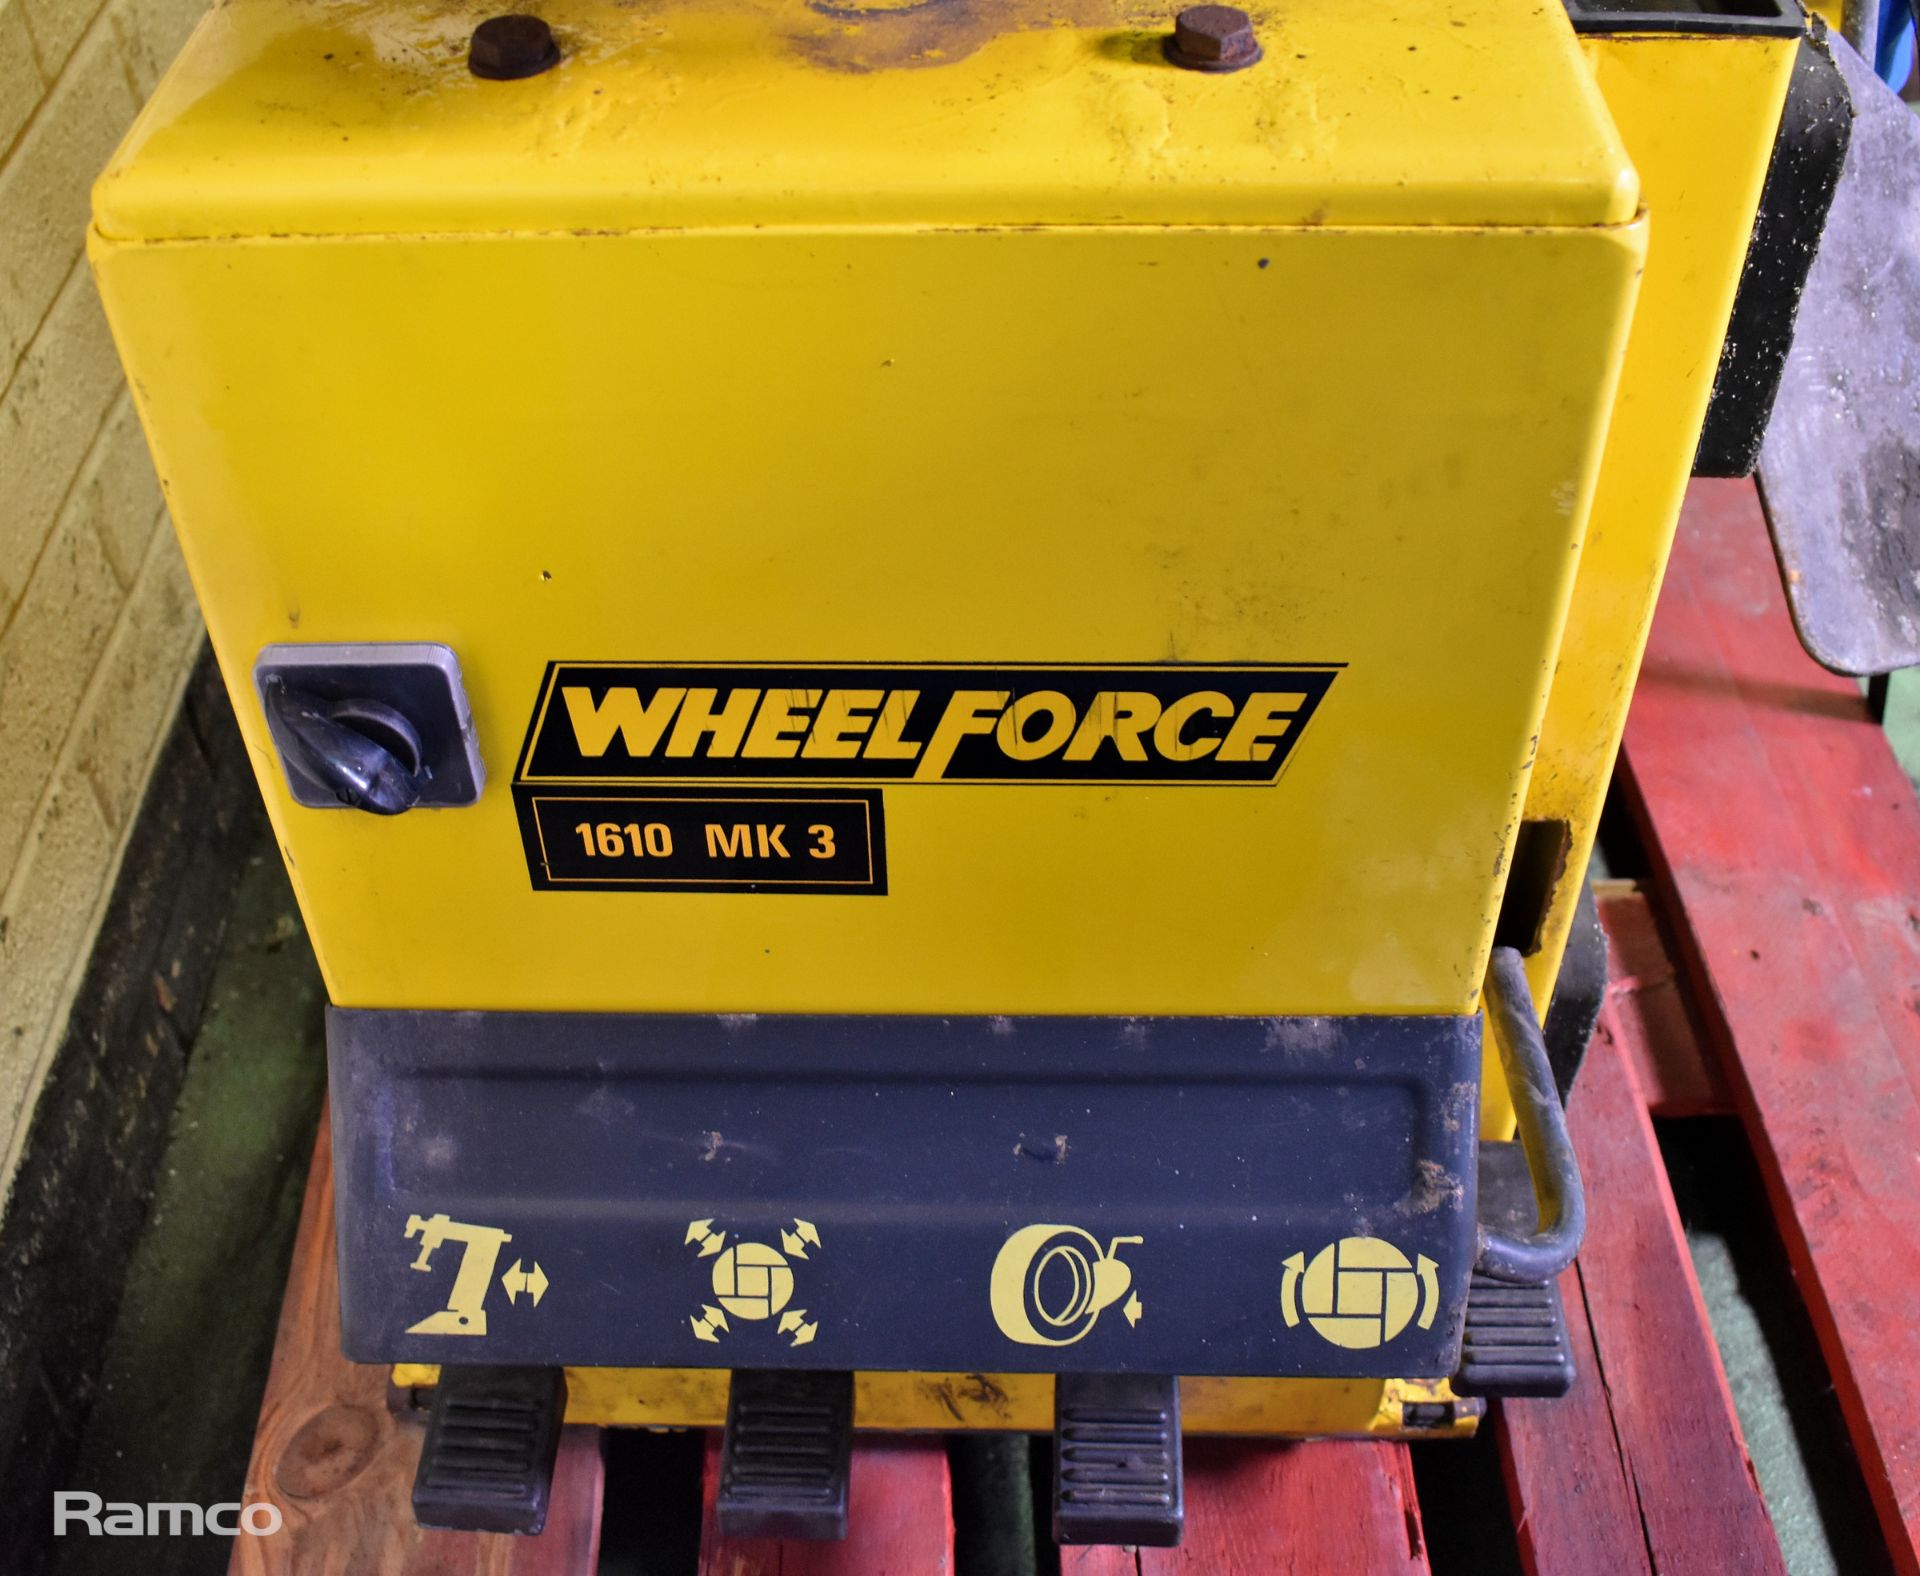 Wheelforce 1610 MK 3 tyre changer - Image 6 of 8